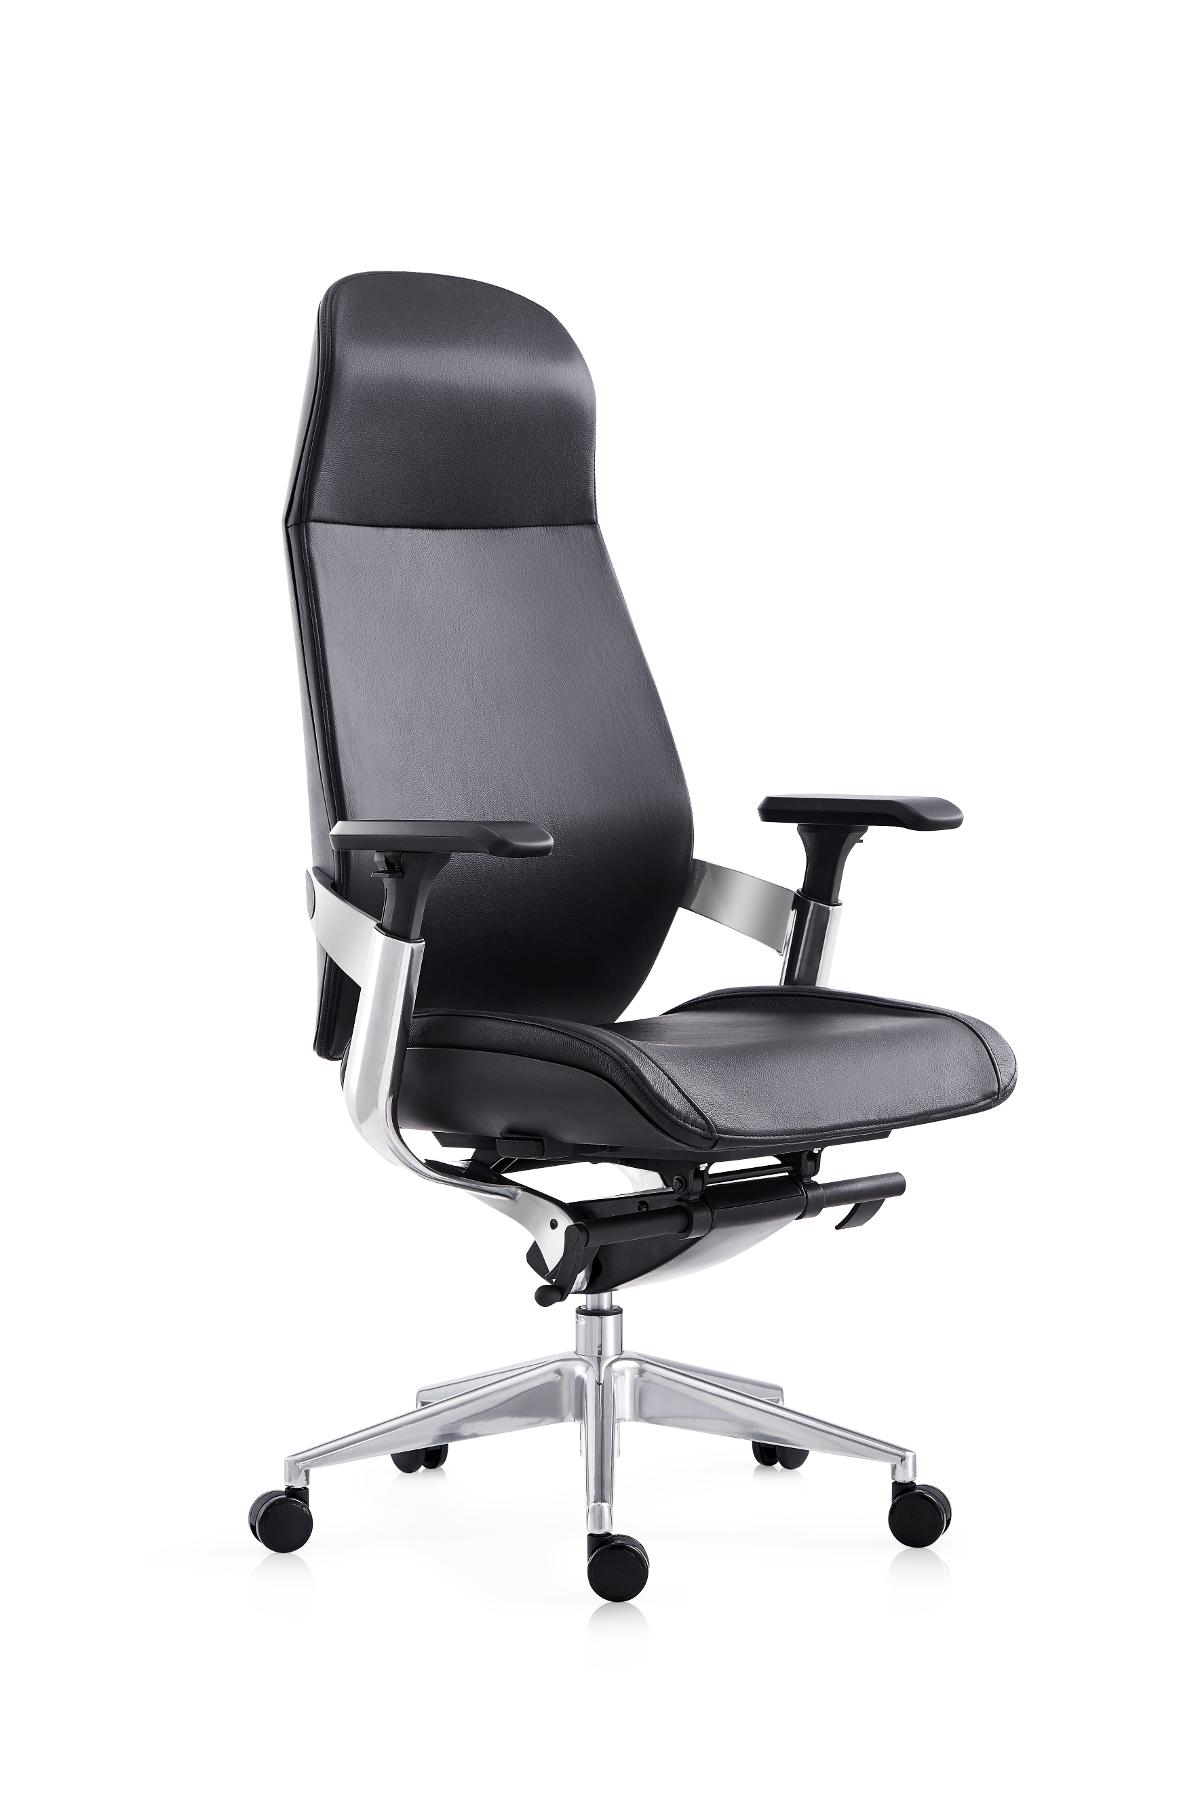 Super Chair เก้าอี้ผู้บริหาร รุ่น 003-1 Black